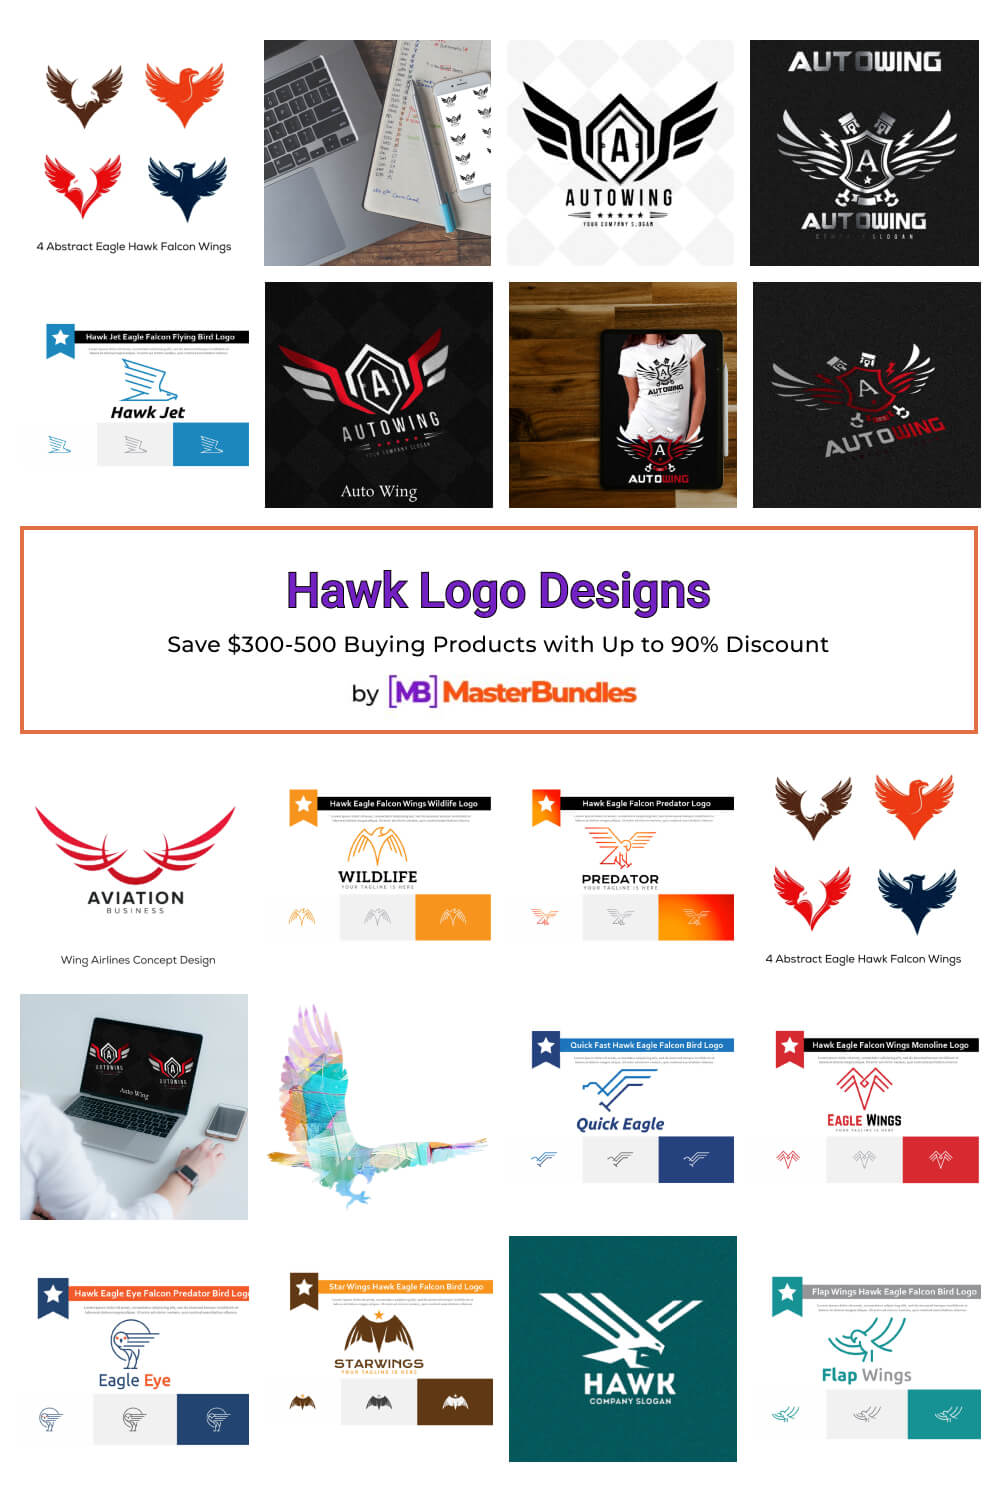 hawk logo designs pinterest image.